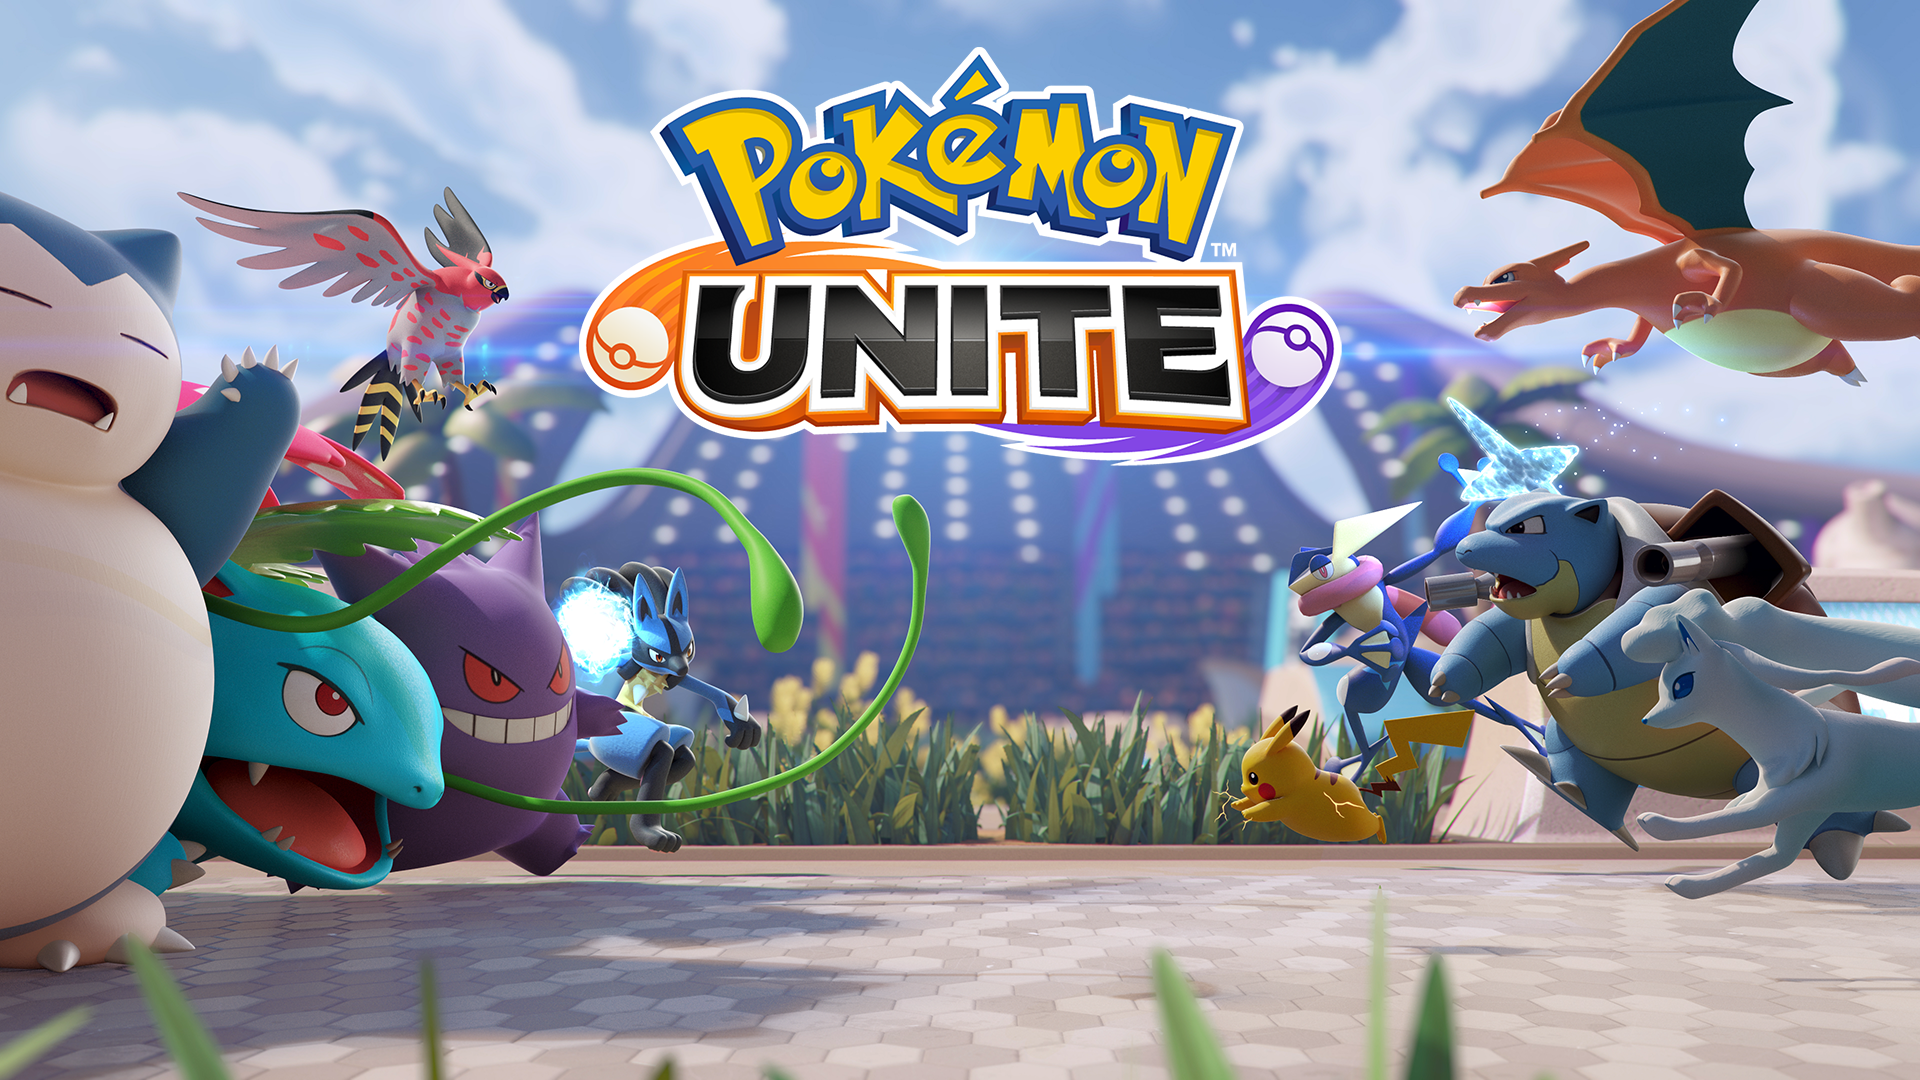 First Pokémon Unite balance patch buffs Charizard, Talonflame, Venusaur